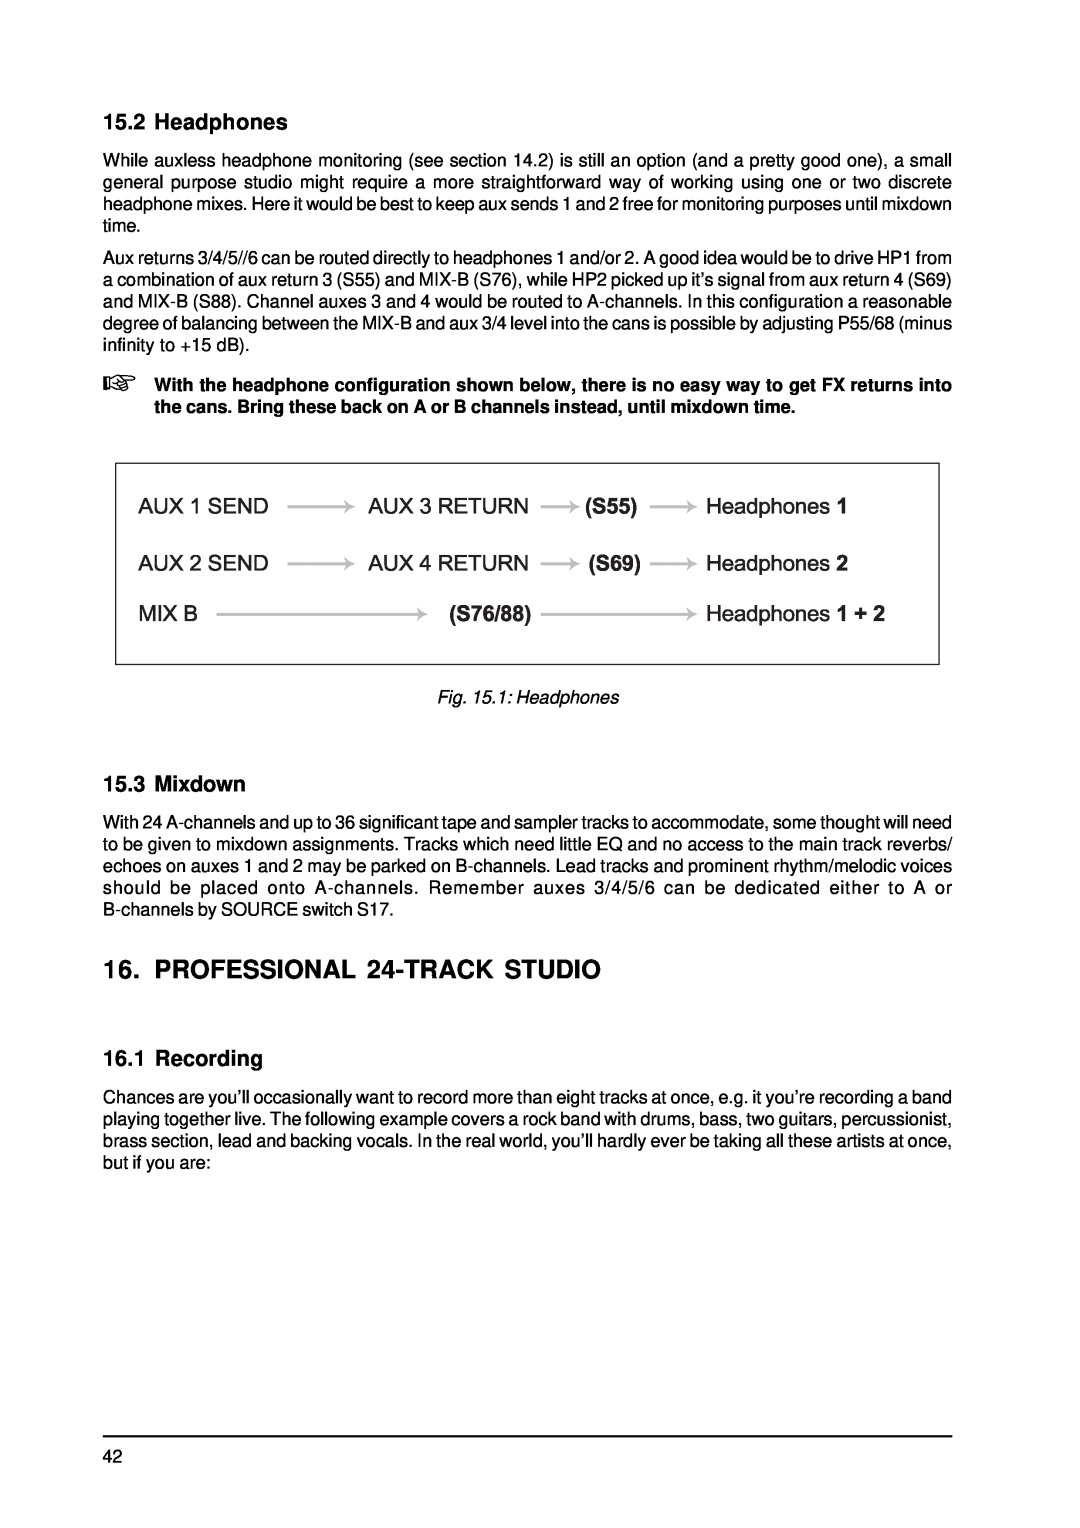 Behringer MX9000 user manual PROFESSIONAL 24-TRACK STUDIO, Mixdown, Recording, 1 Headphones 